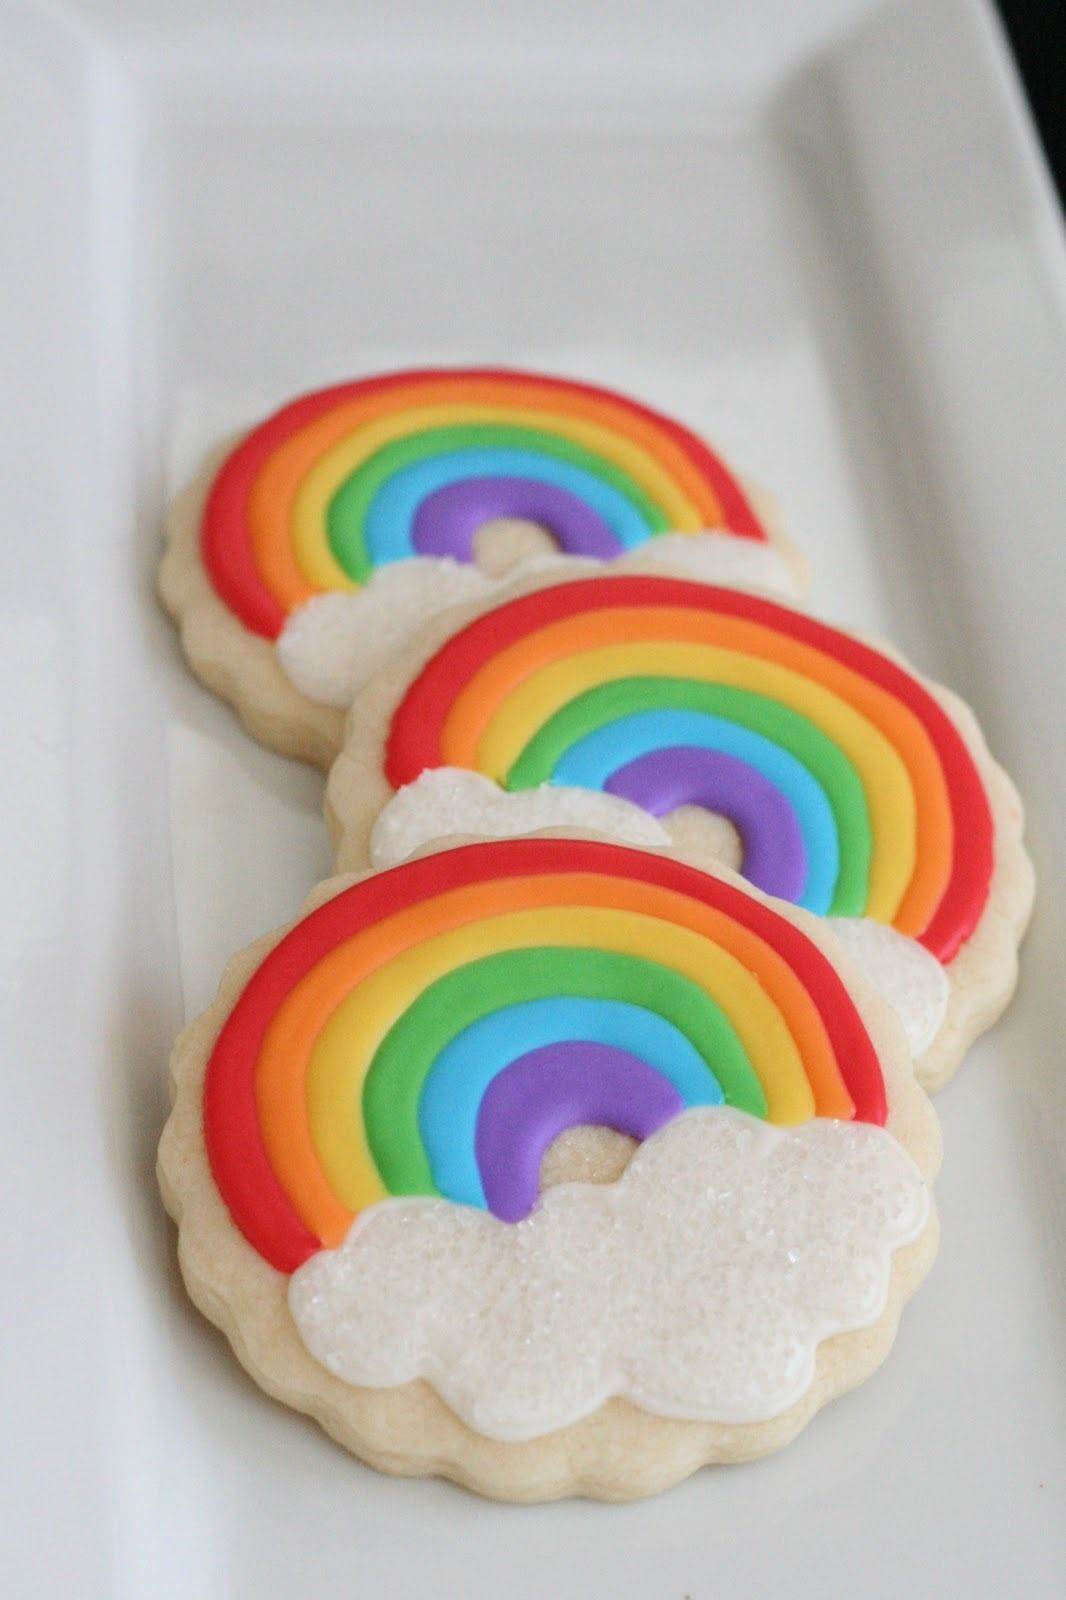 Rainbow Keksse Recipe Sugar cast themselves make use of food coloring